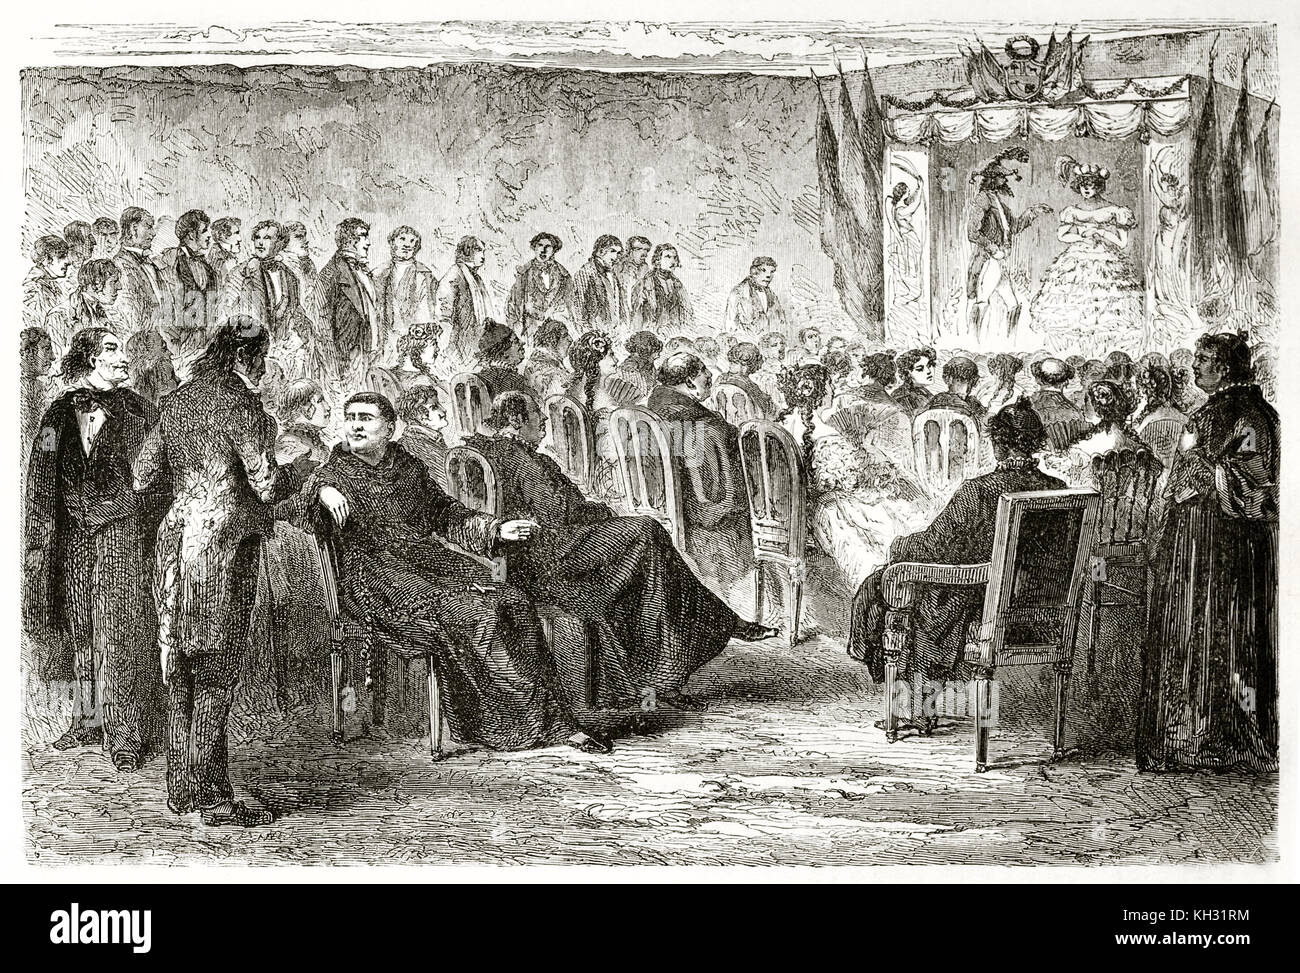 Vecchia illustrazione di una rappresentazione teatrale in San Bernardo college, Cuzco, Perù. Da Riou, publ. in Le Tour du Monde, Parigi, 1863 Foto Stock